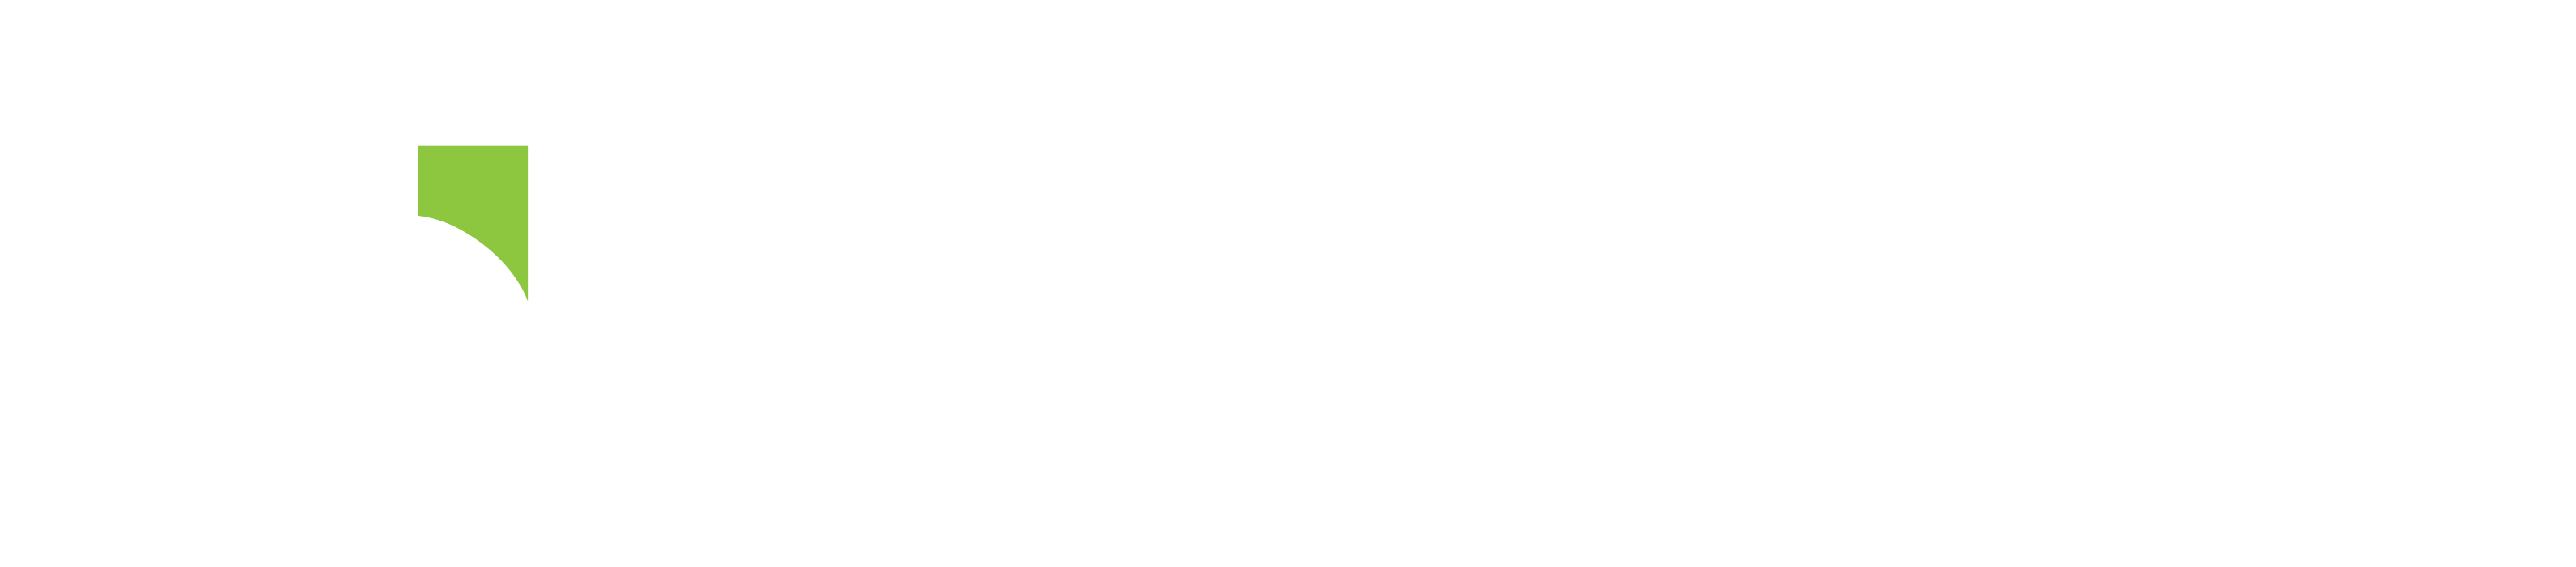 firku logo